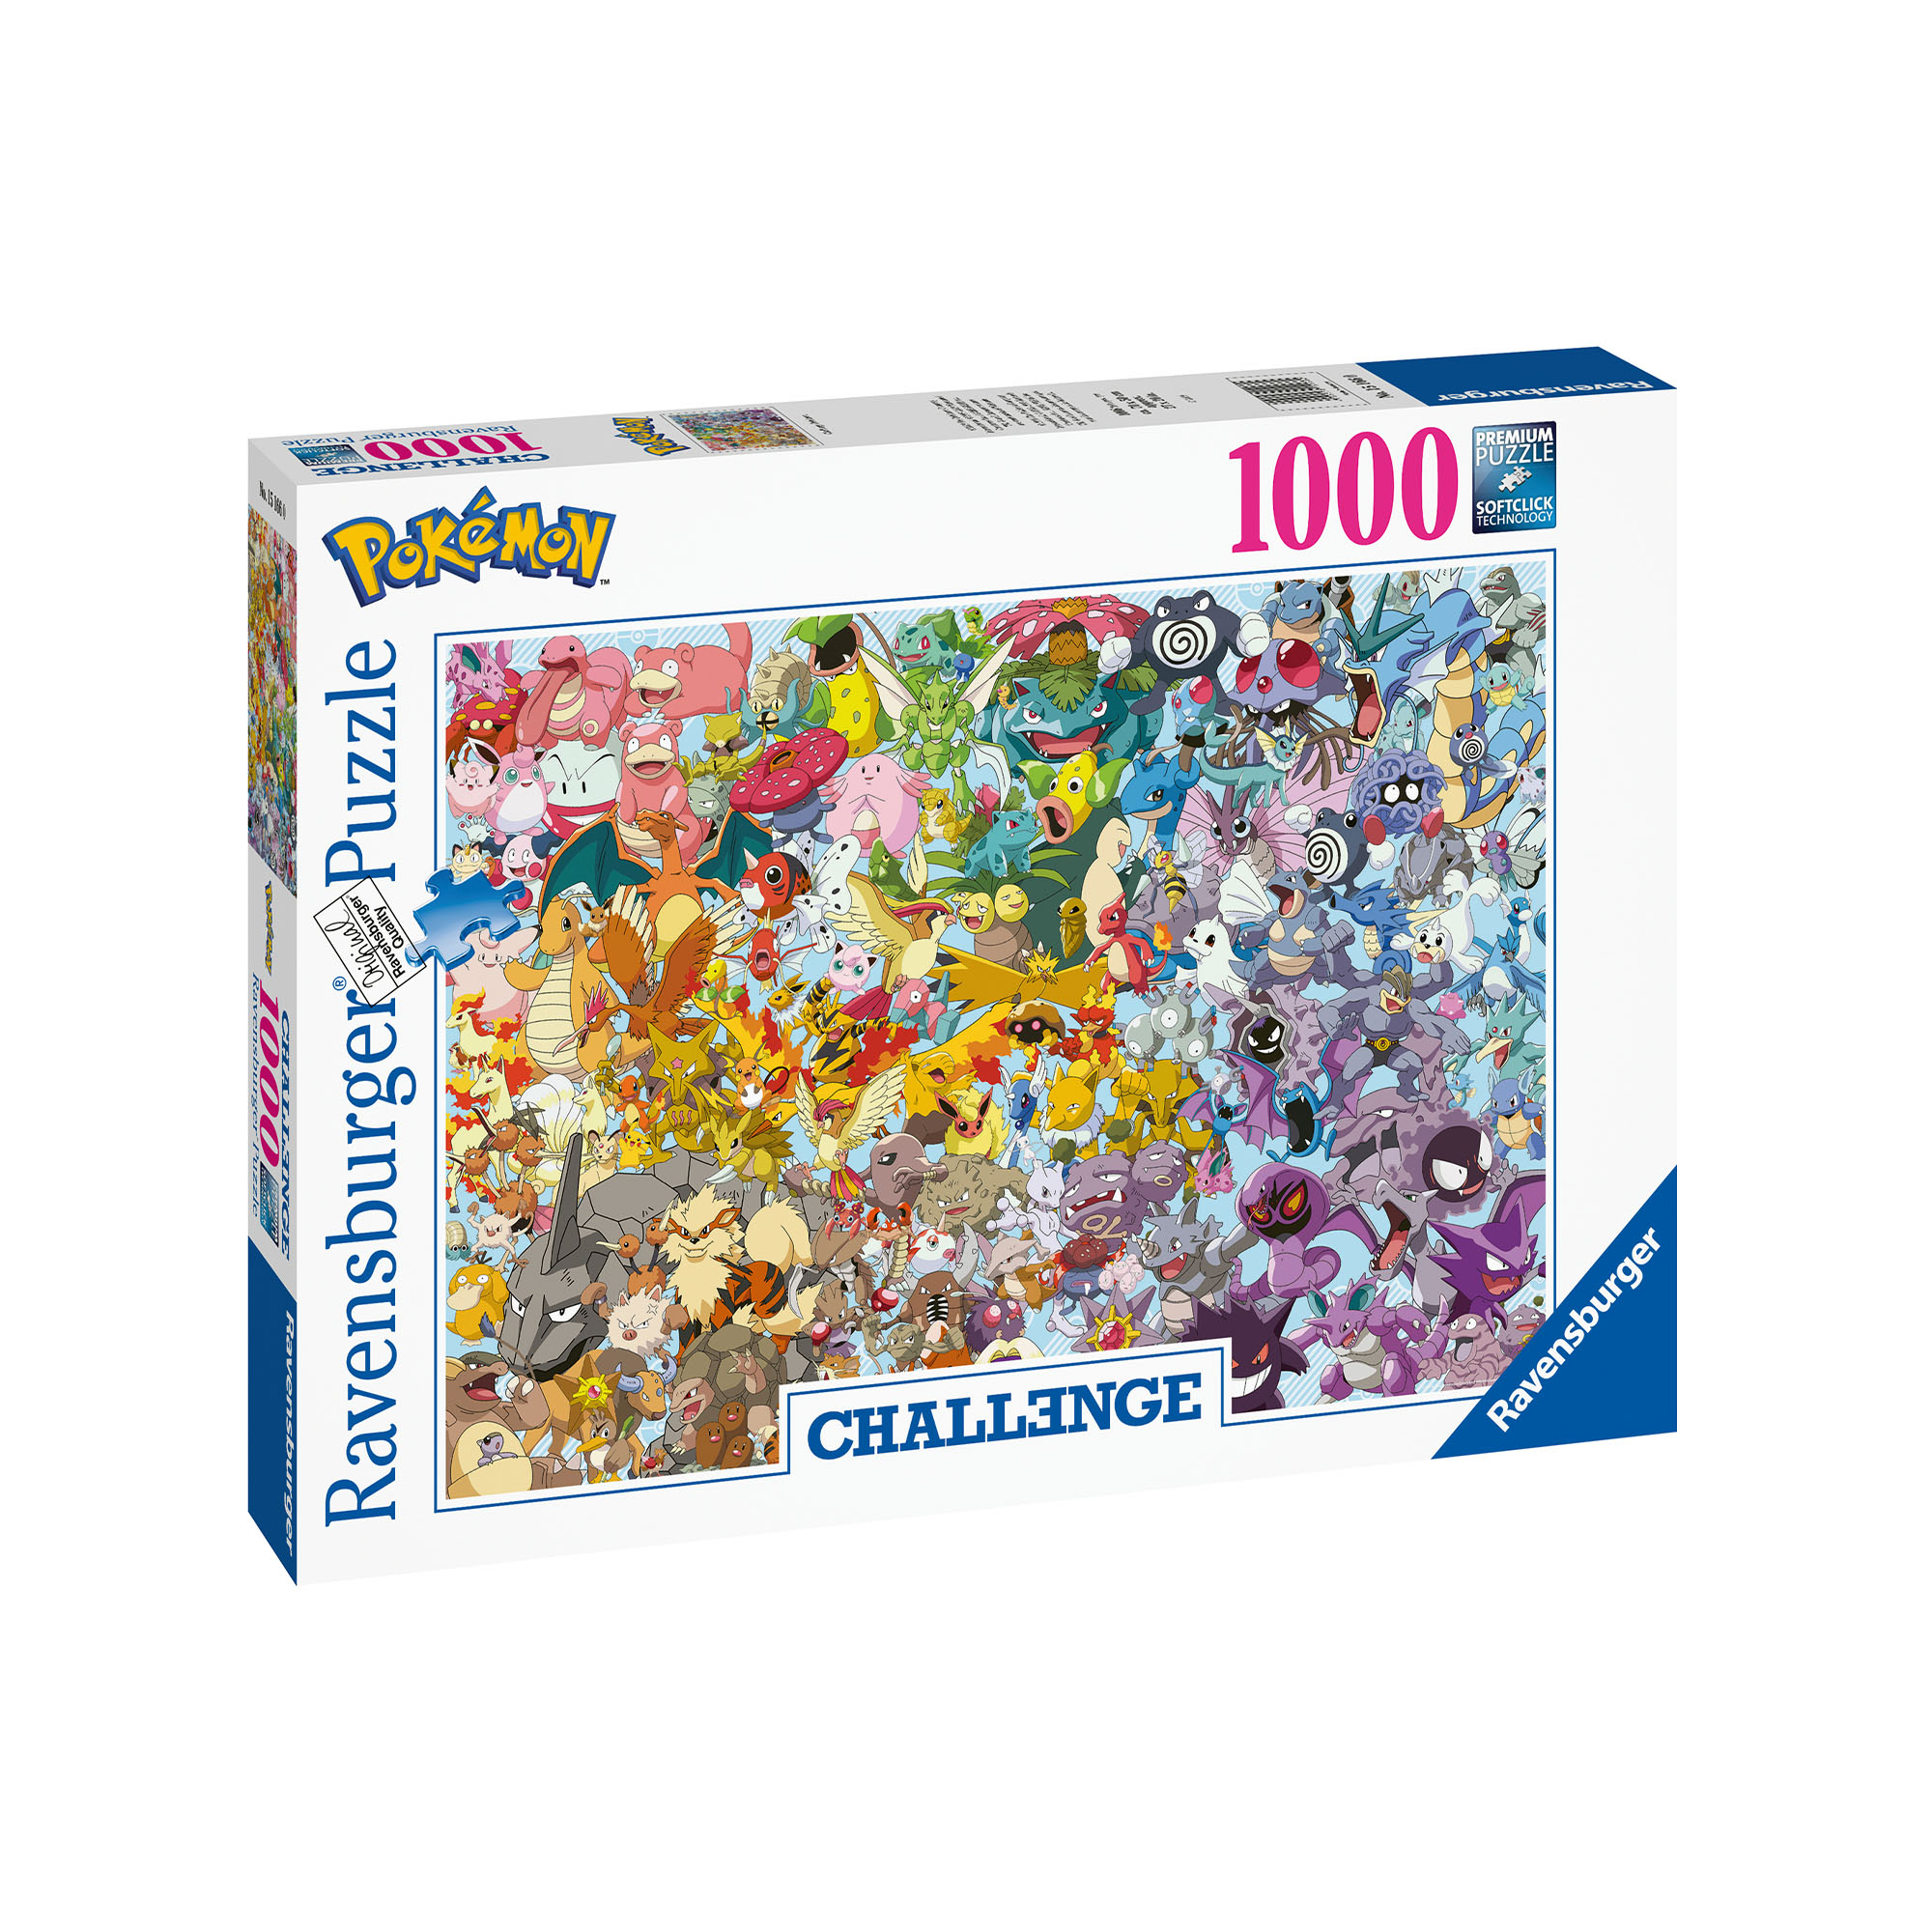 Ravensburger Puzzle 1000 pezzi 15166 - CHALLENGE PUZZLE POKEMON, , large